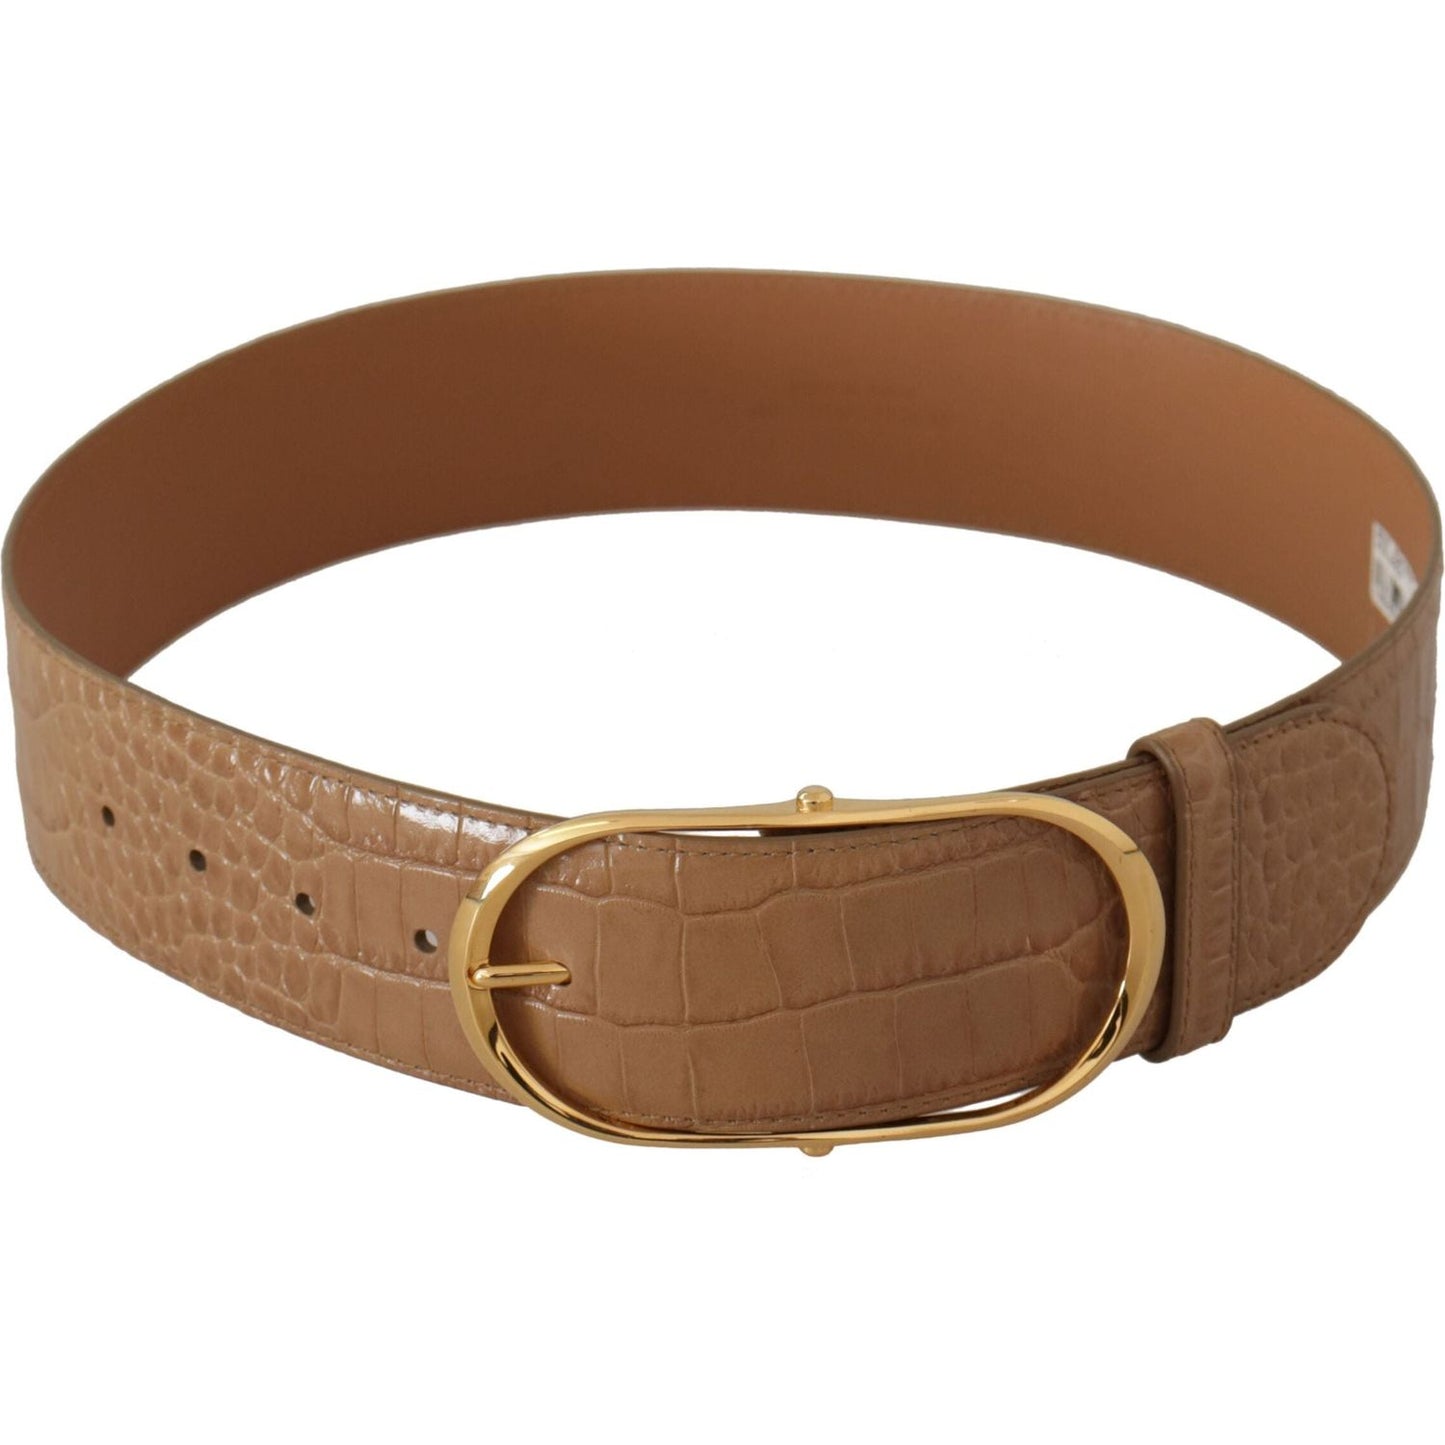 Dolce & Gabbana Elegant Beige Leather Belt with Engraved Buckle brown-beige-leather-gold-metal-oval-buckle-belt